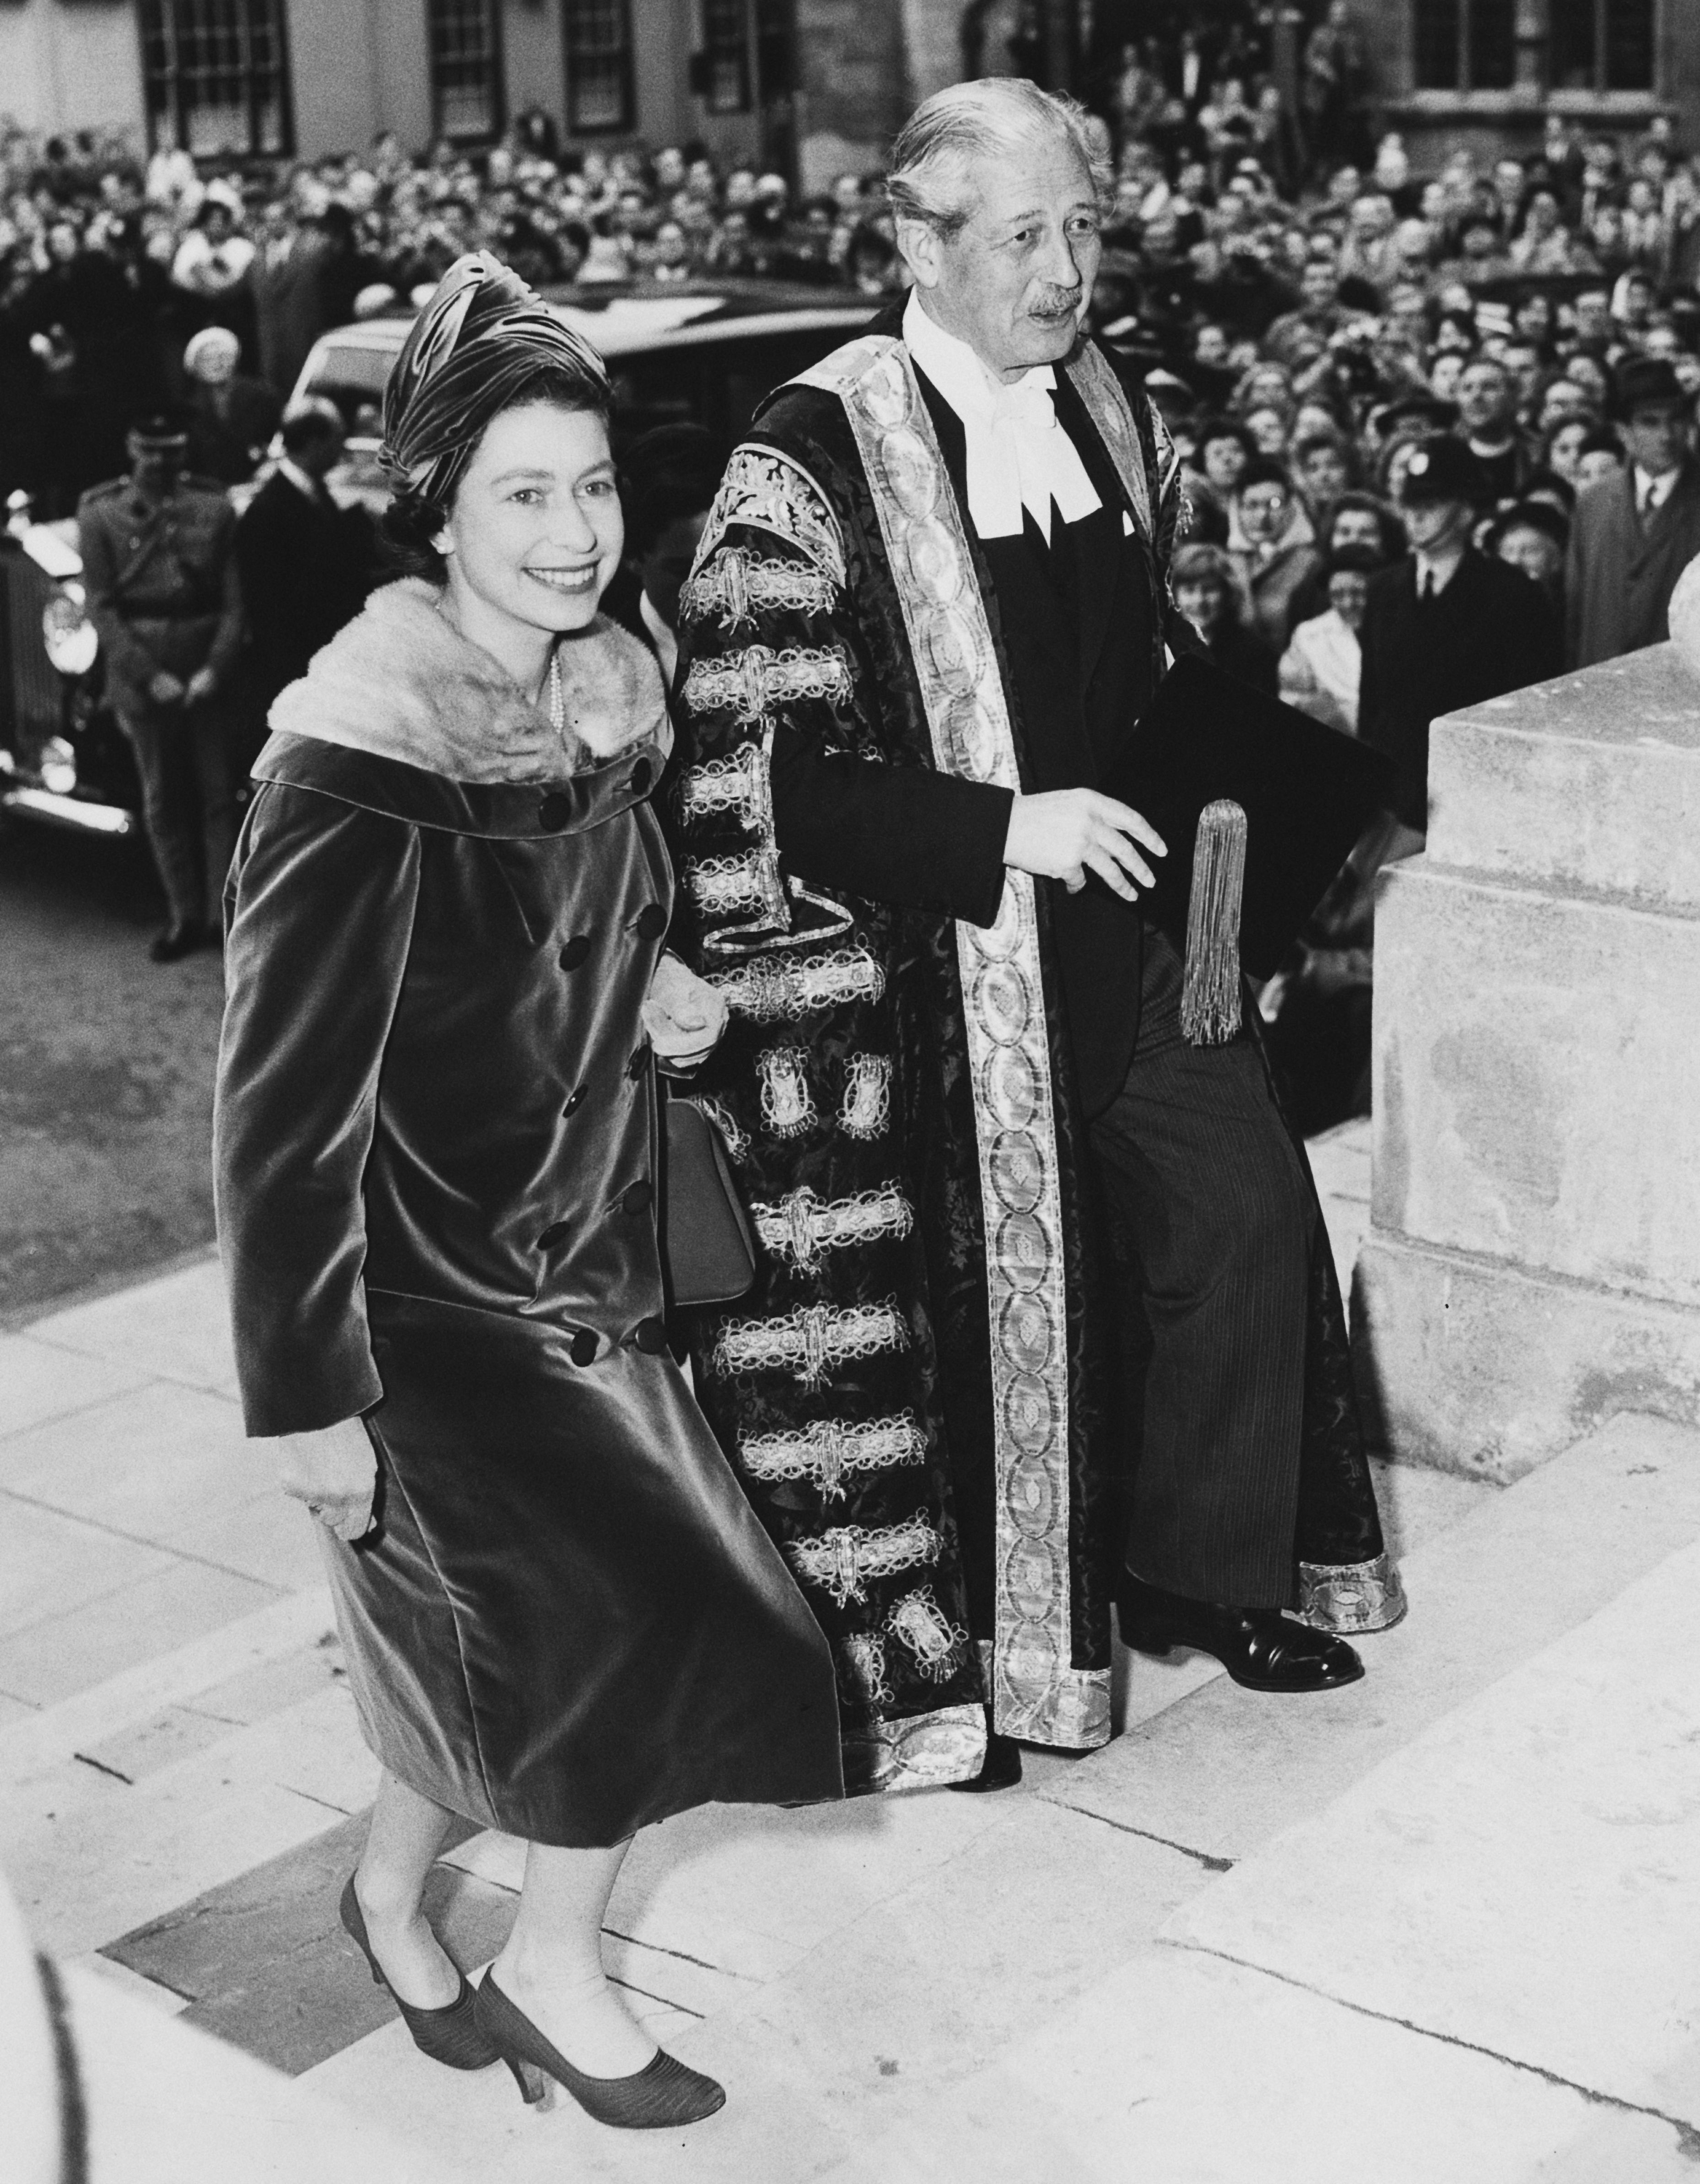 Queen Elizabeth II visits British Prime Minister Harold Macmillan, chancellor of Oxford University, in November 1960.